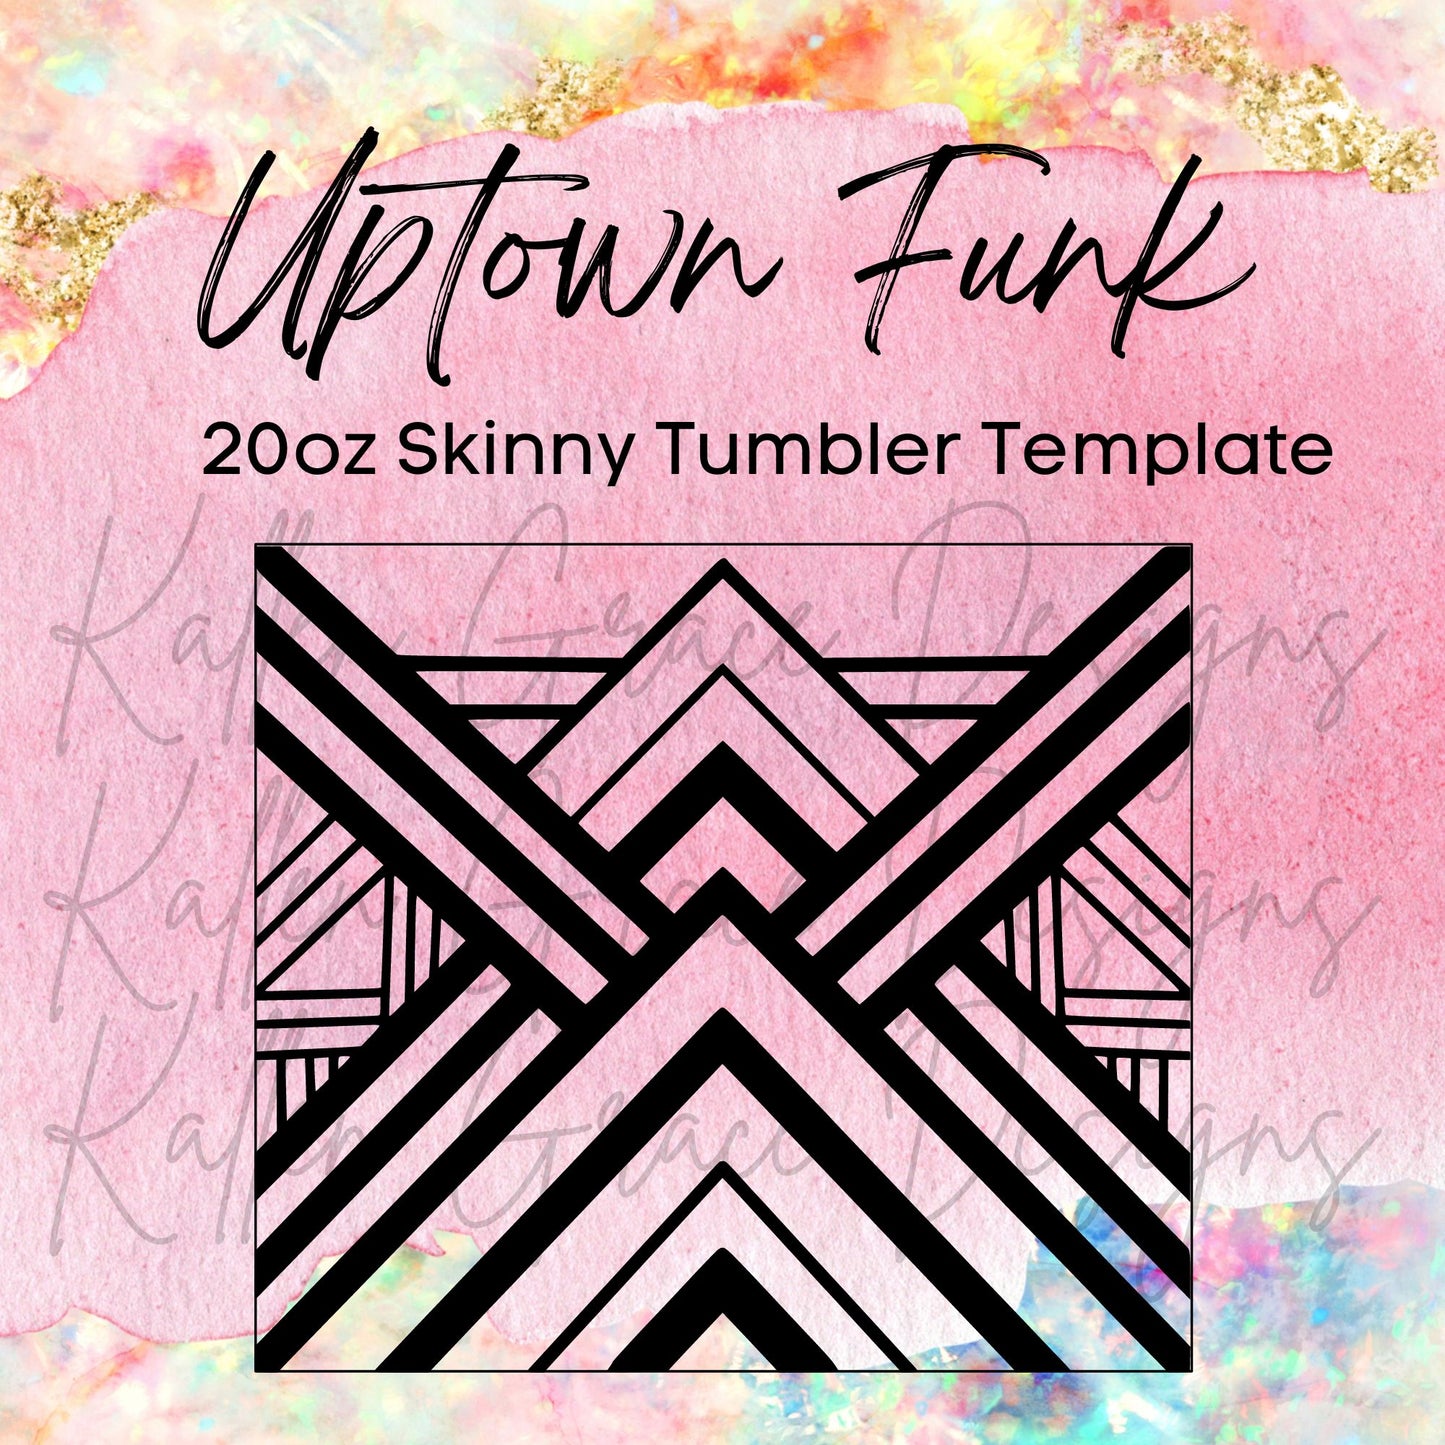 20oz Skinny Uptown Funk Template